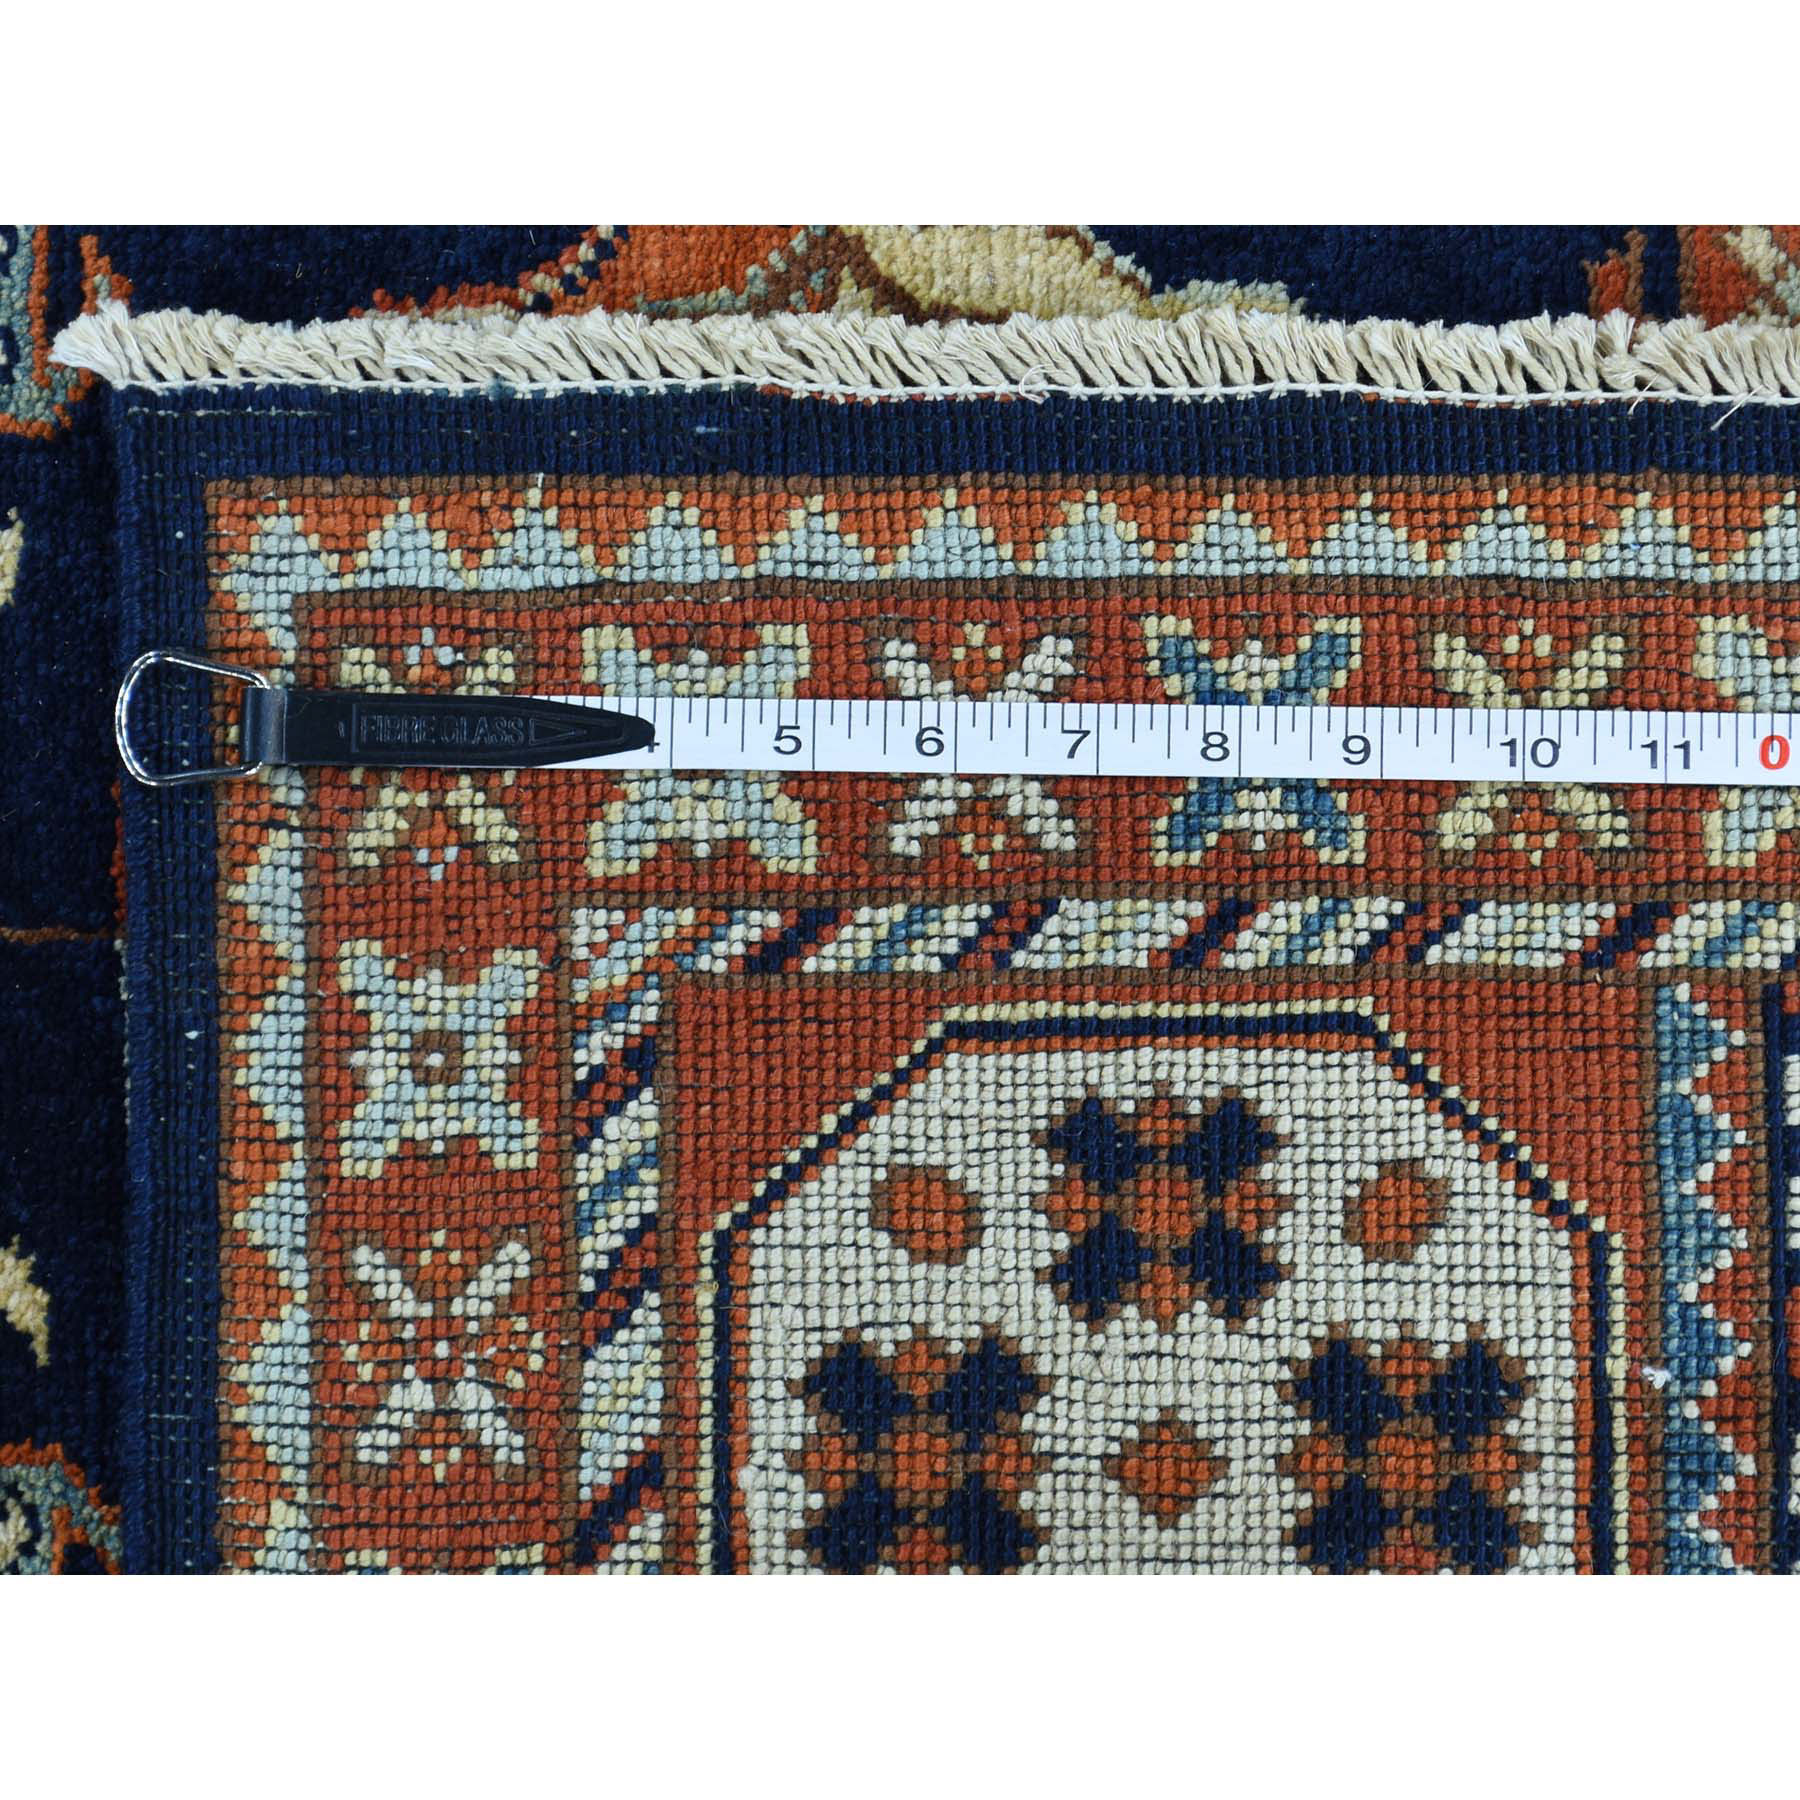 8-3 x10-2  Hand-Knotted Turkoman Ersari Pure Wool Oriental Rug 